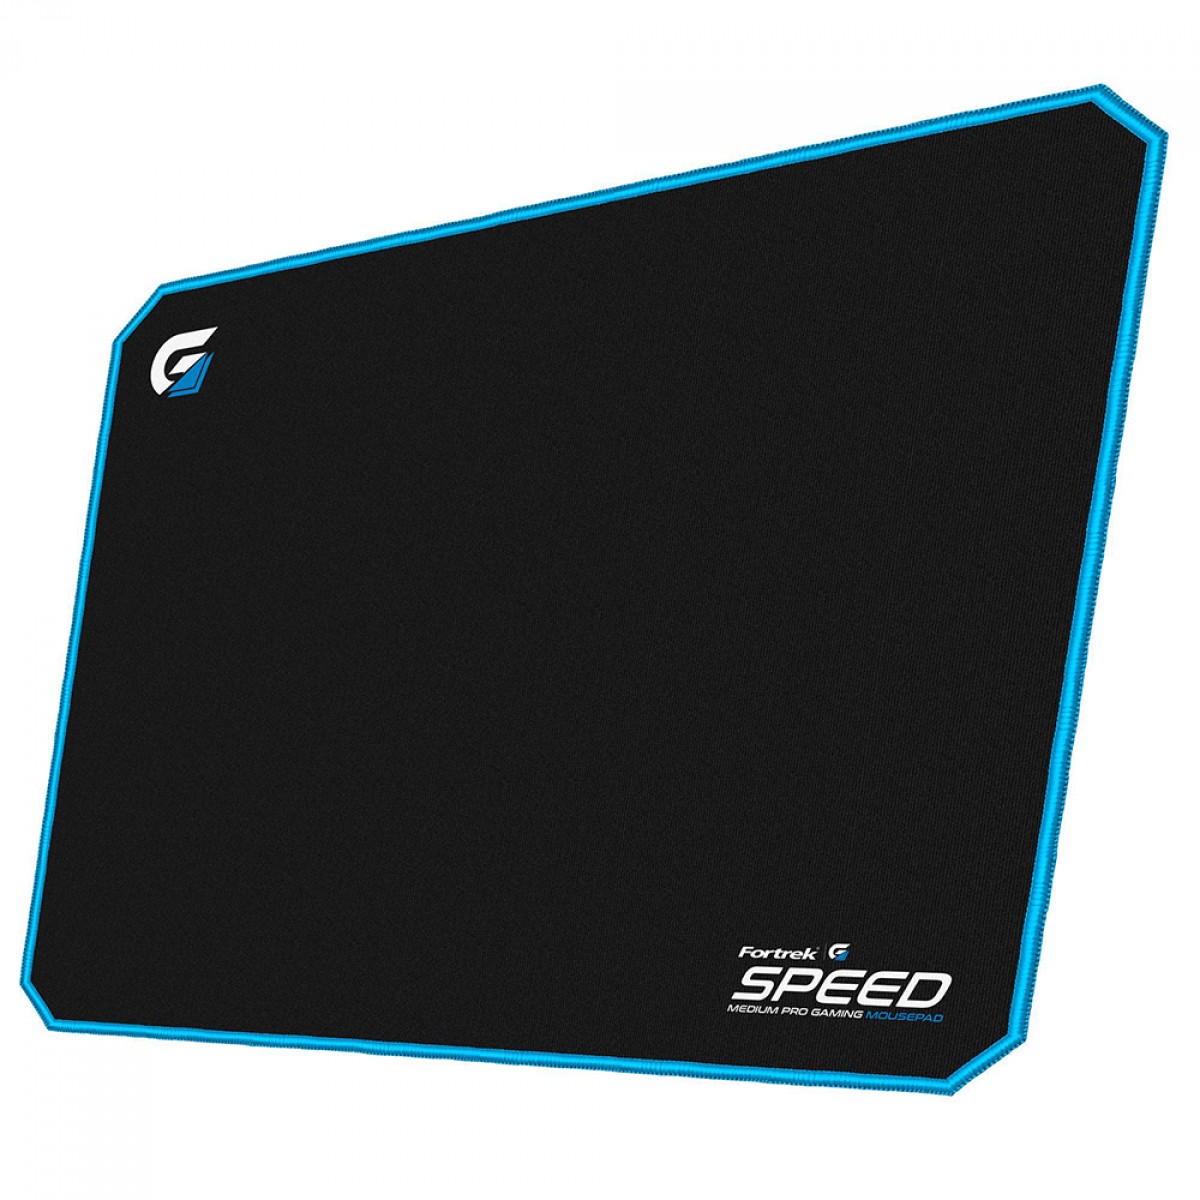 Mouse Pad Gamer Fortrek Speed MPG101 AZ, Médio (320x240mm), Preto/Azul - 72696